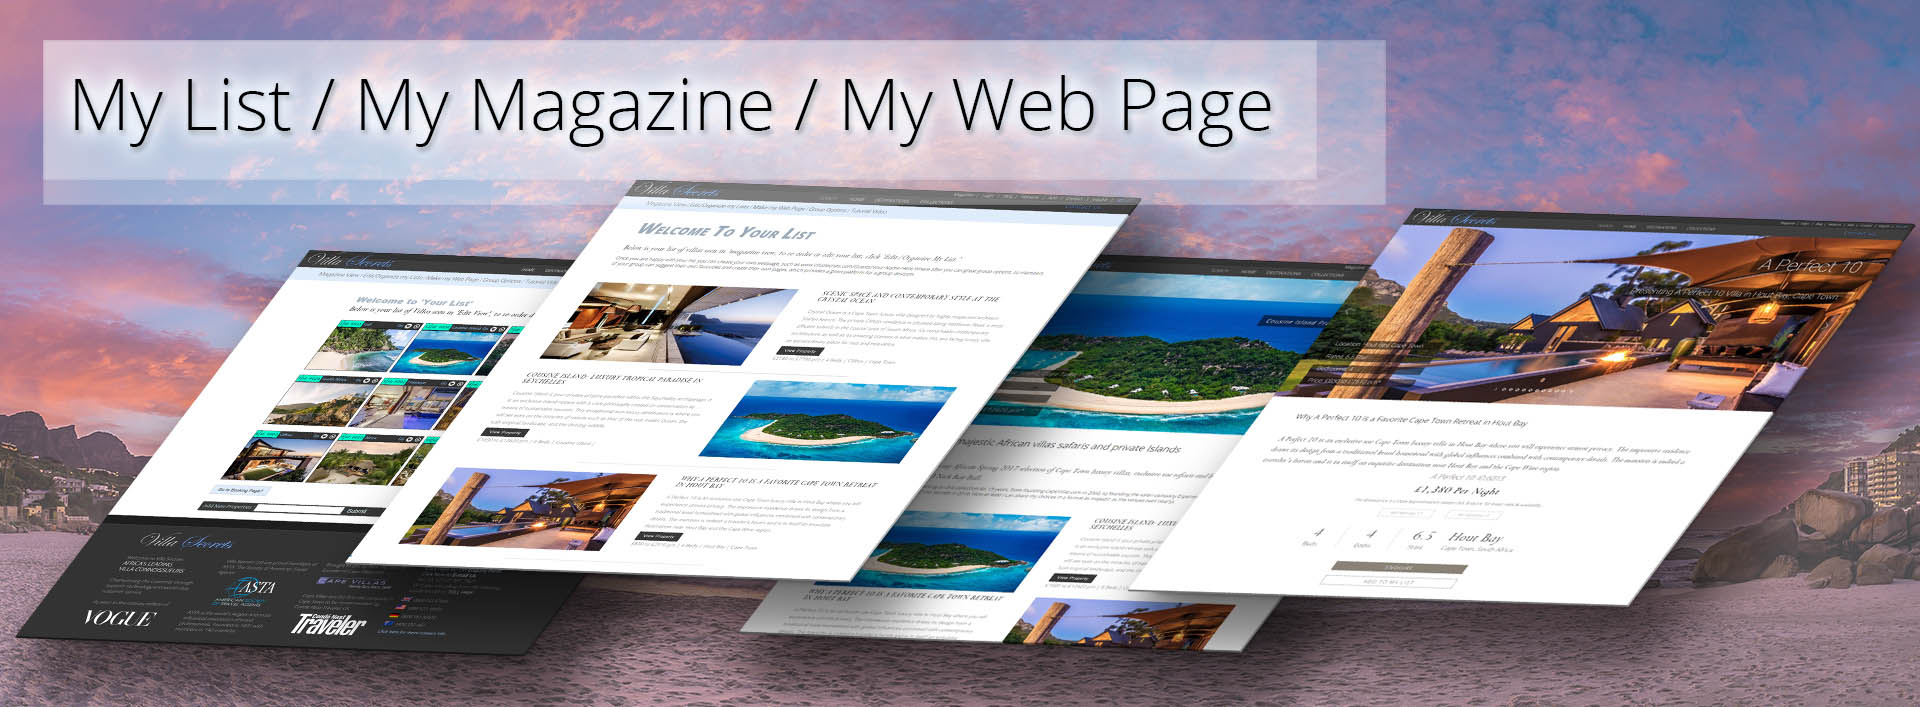 My List - My Magazine - My Web Page